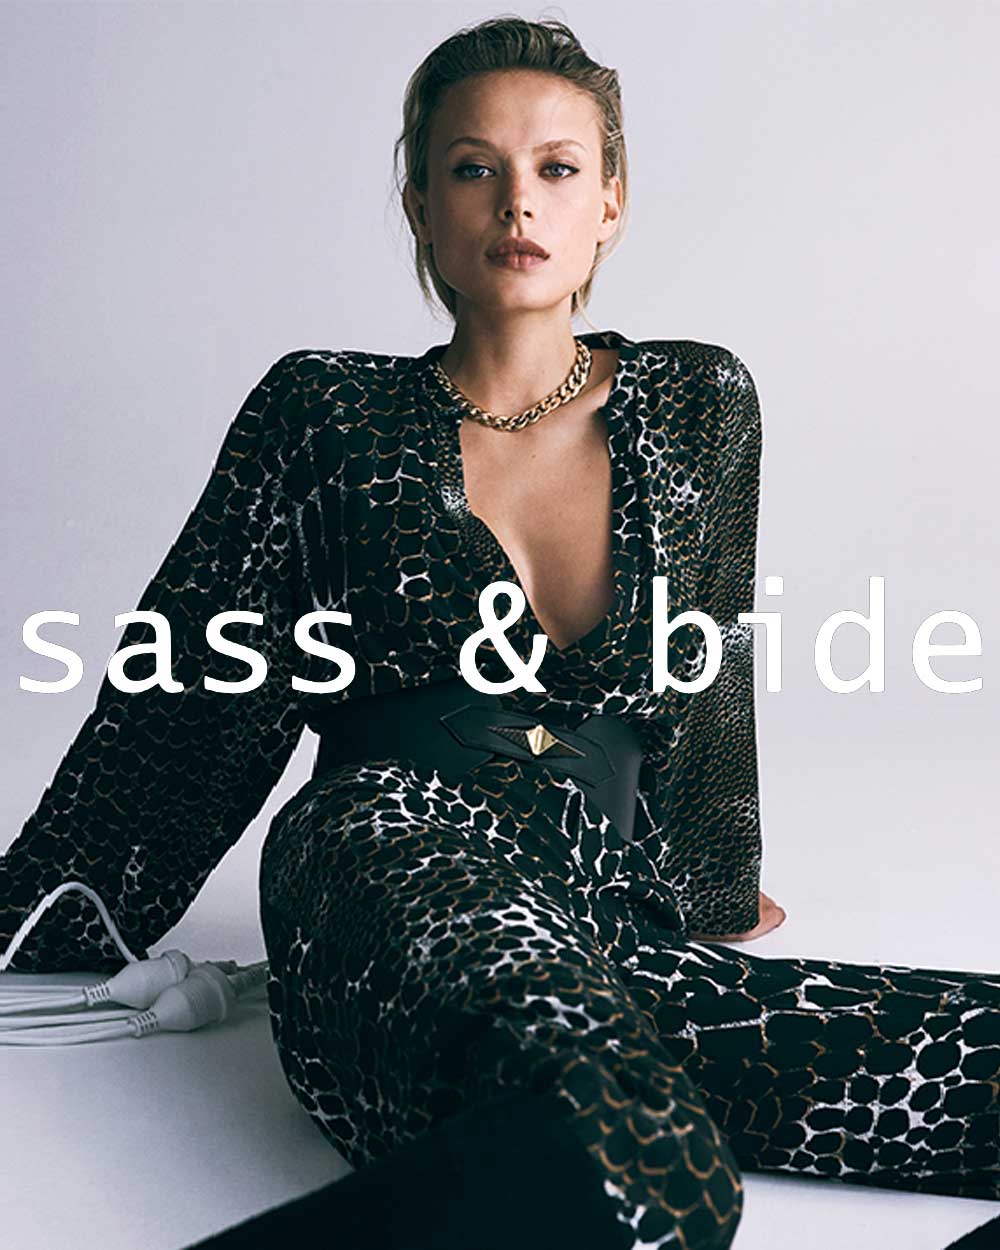 Sass & Bide Best Independent Australian Made Clothing Brand